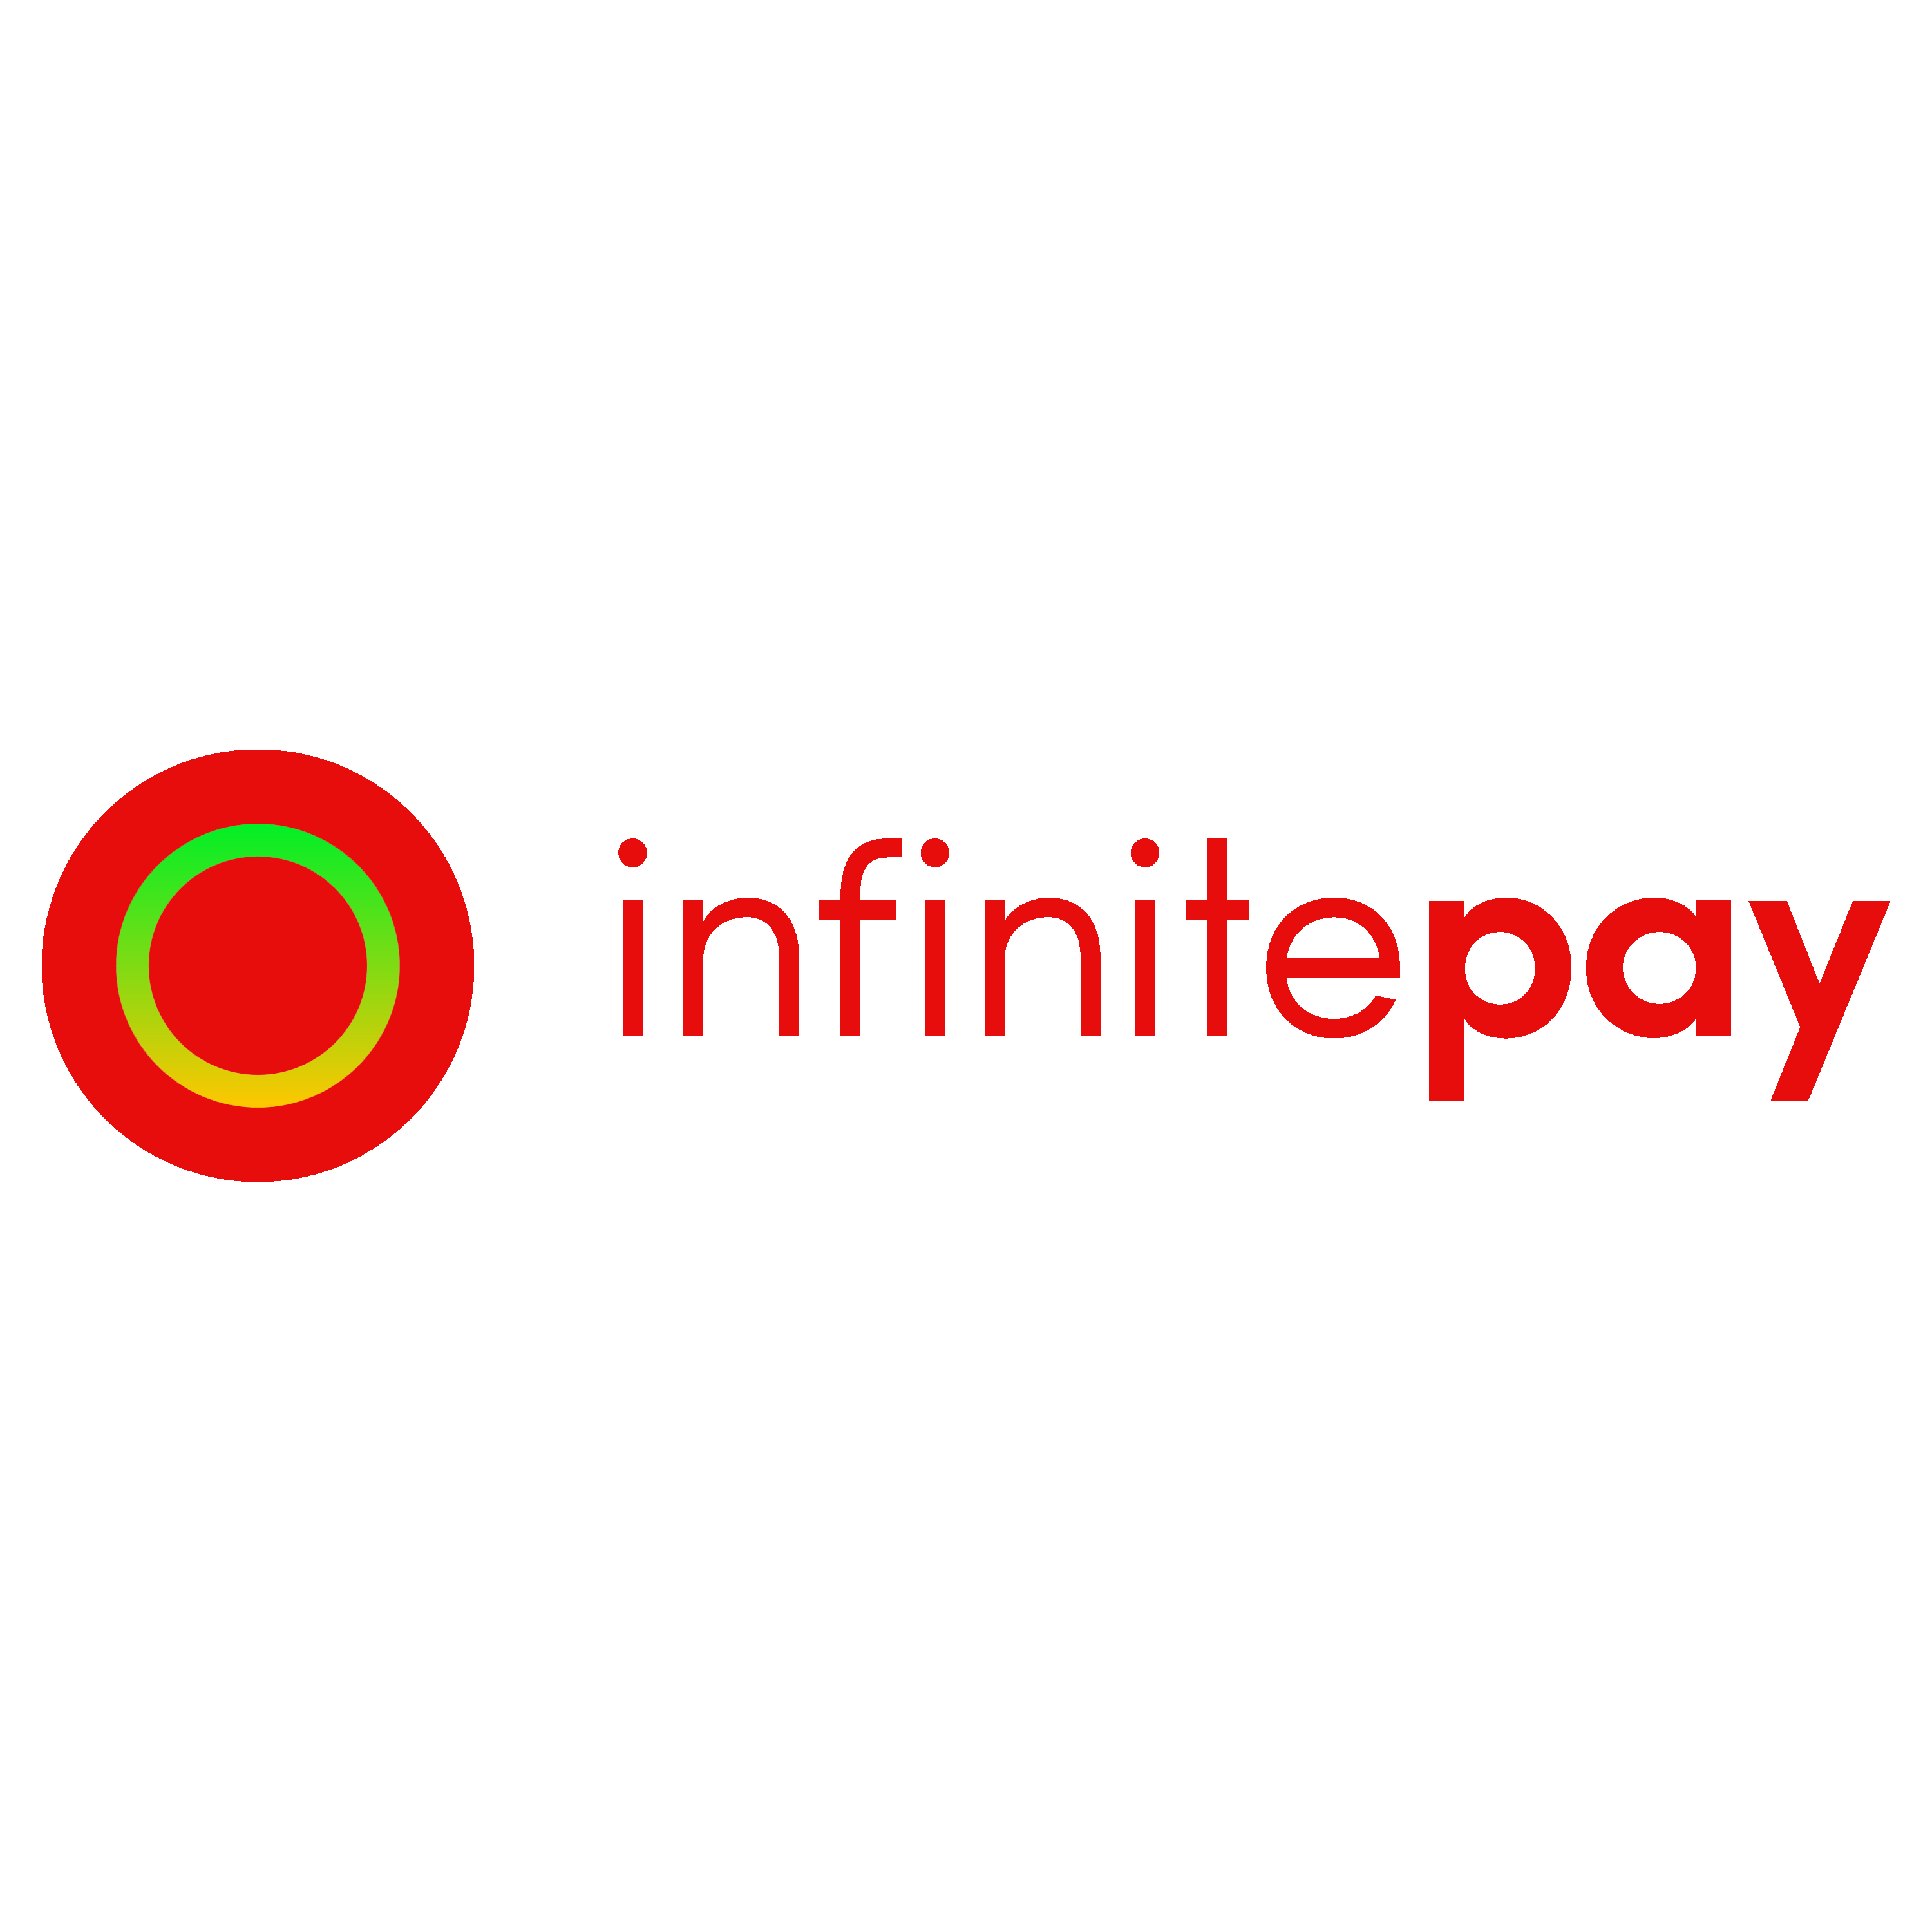 Infinitepay Logo Transparent Picture